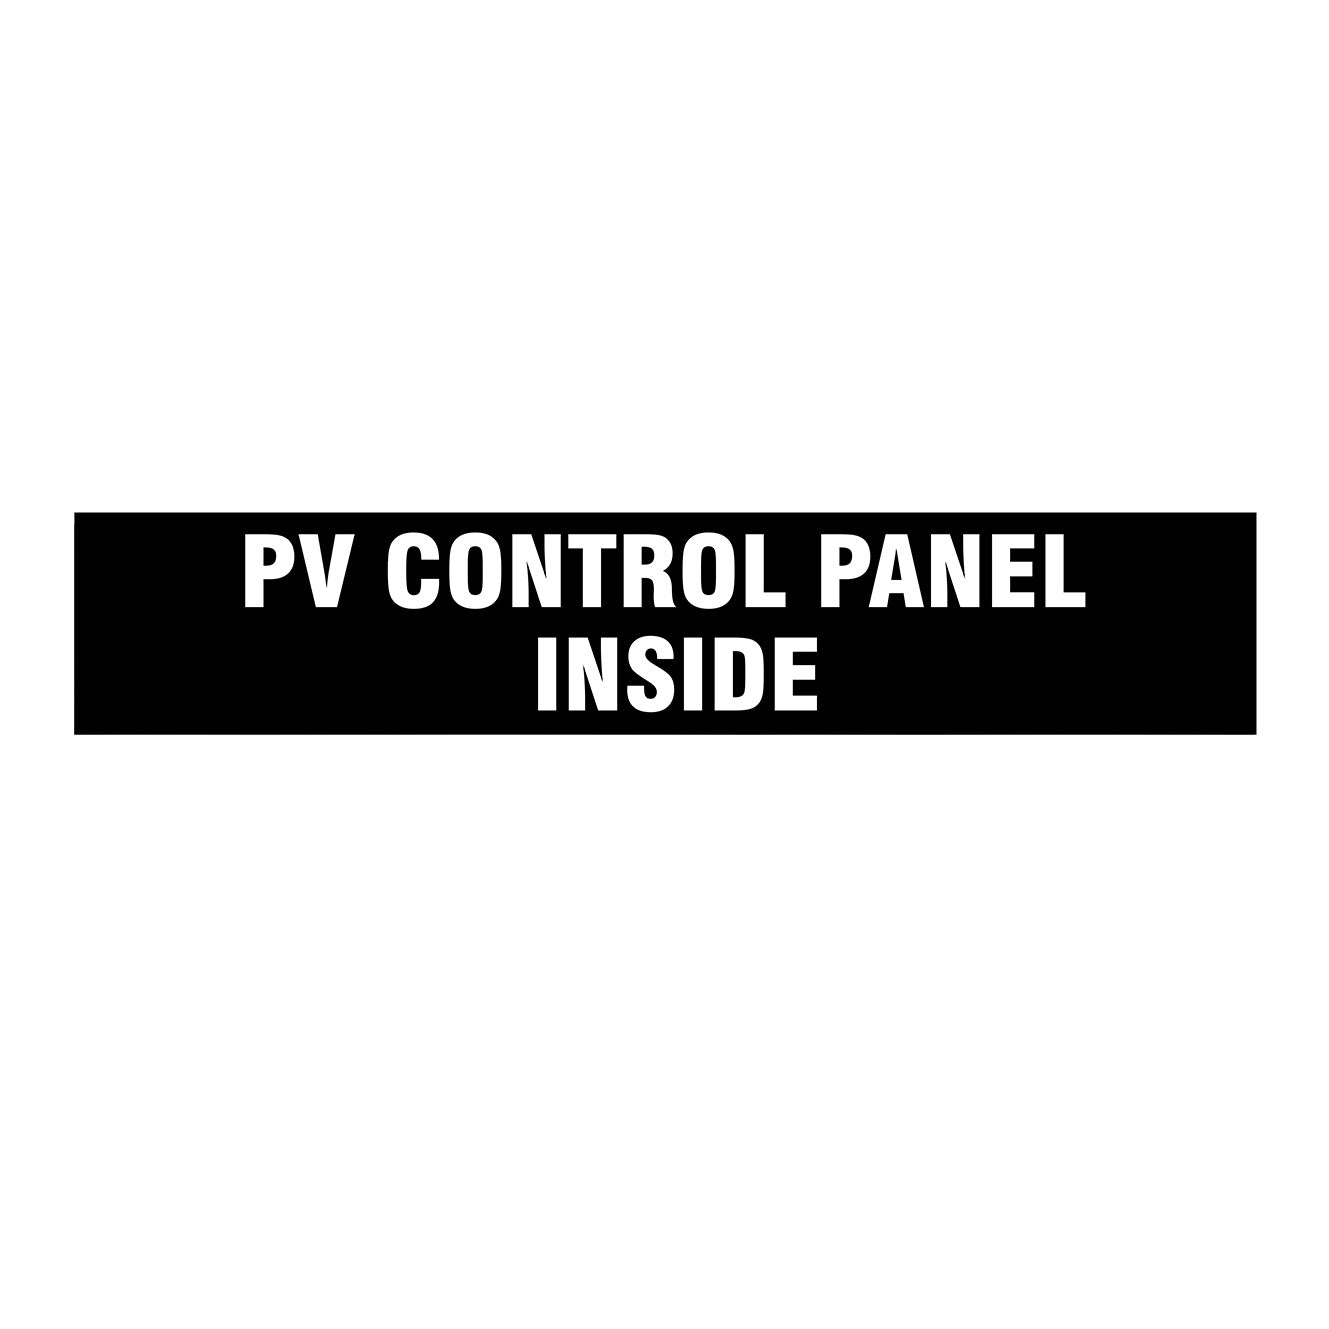 PVC CONTROL PANEL INSIDE SIGN